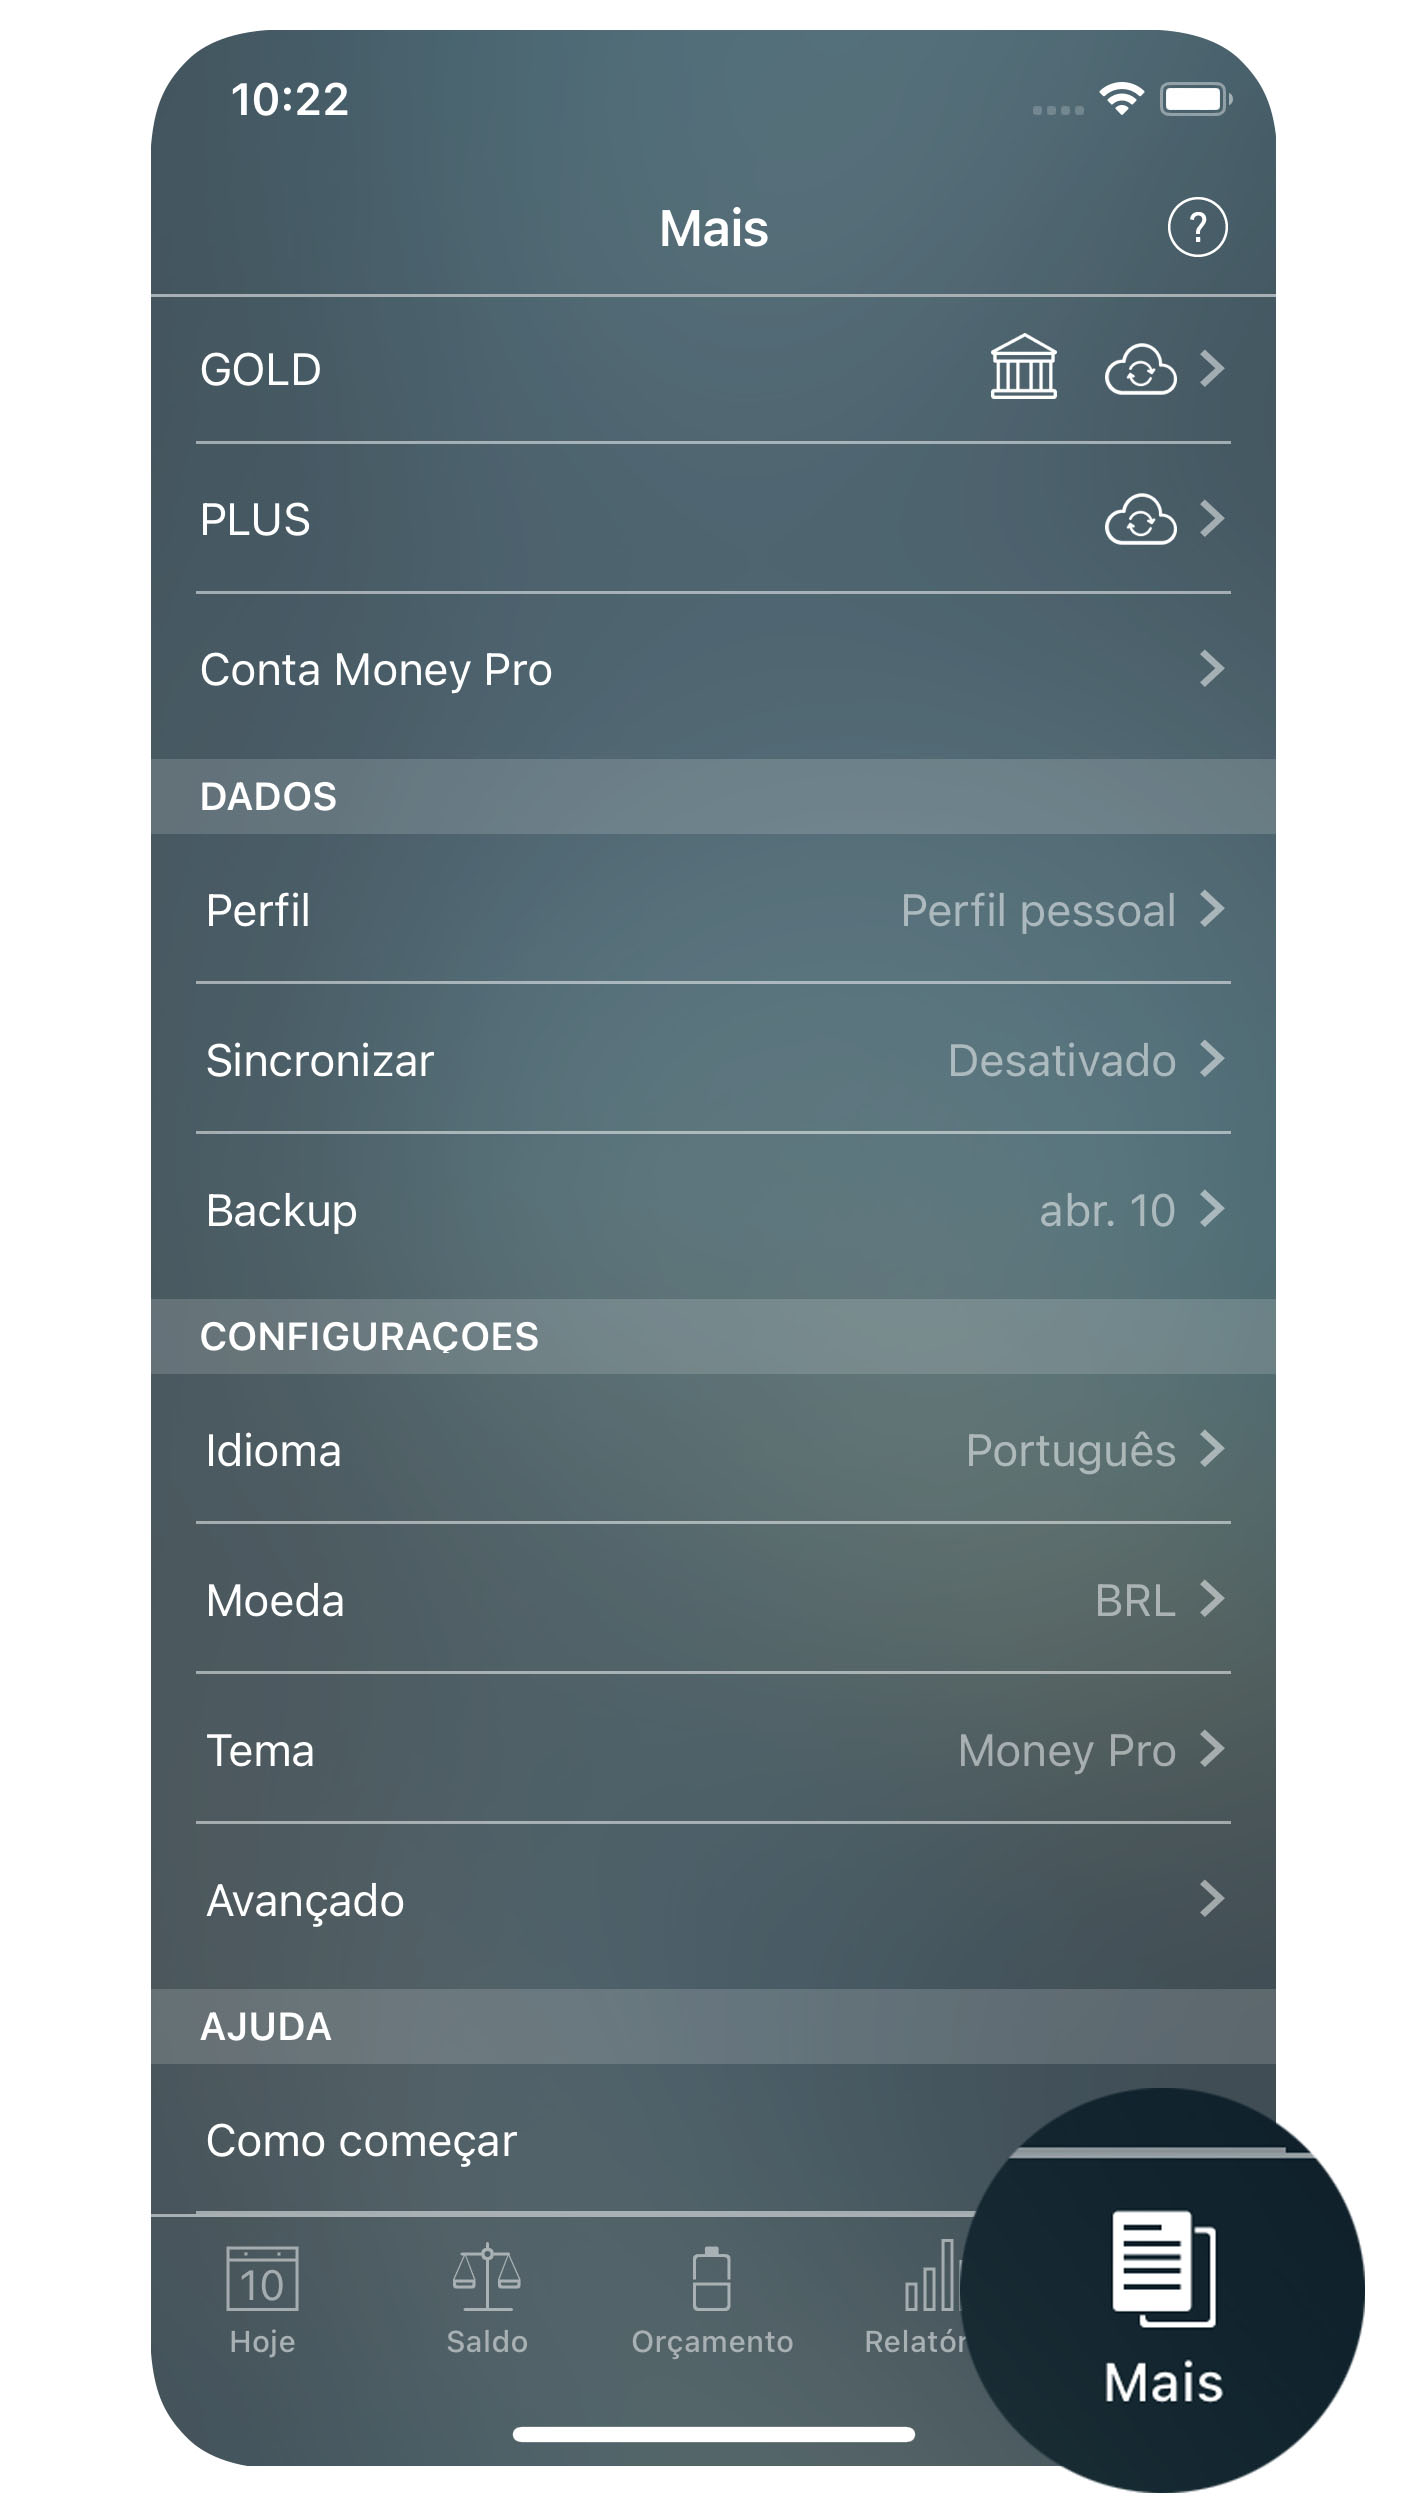 Money Pro - Mais (backup, perfis, sincronização) - iPhone